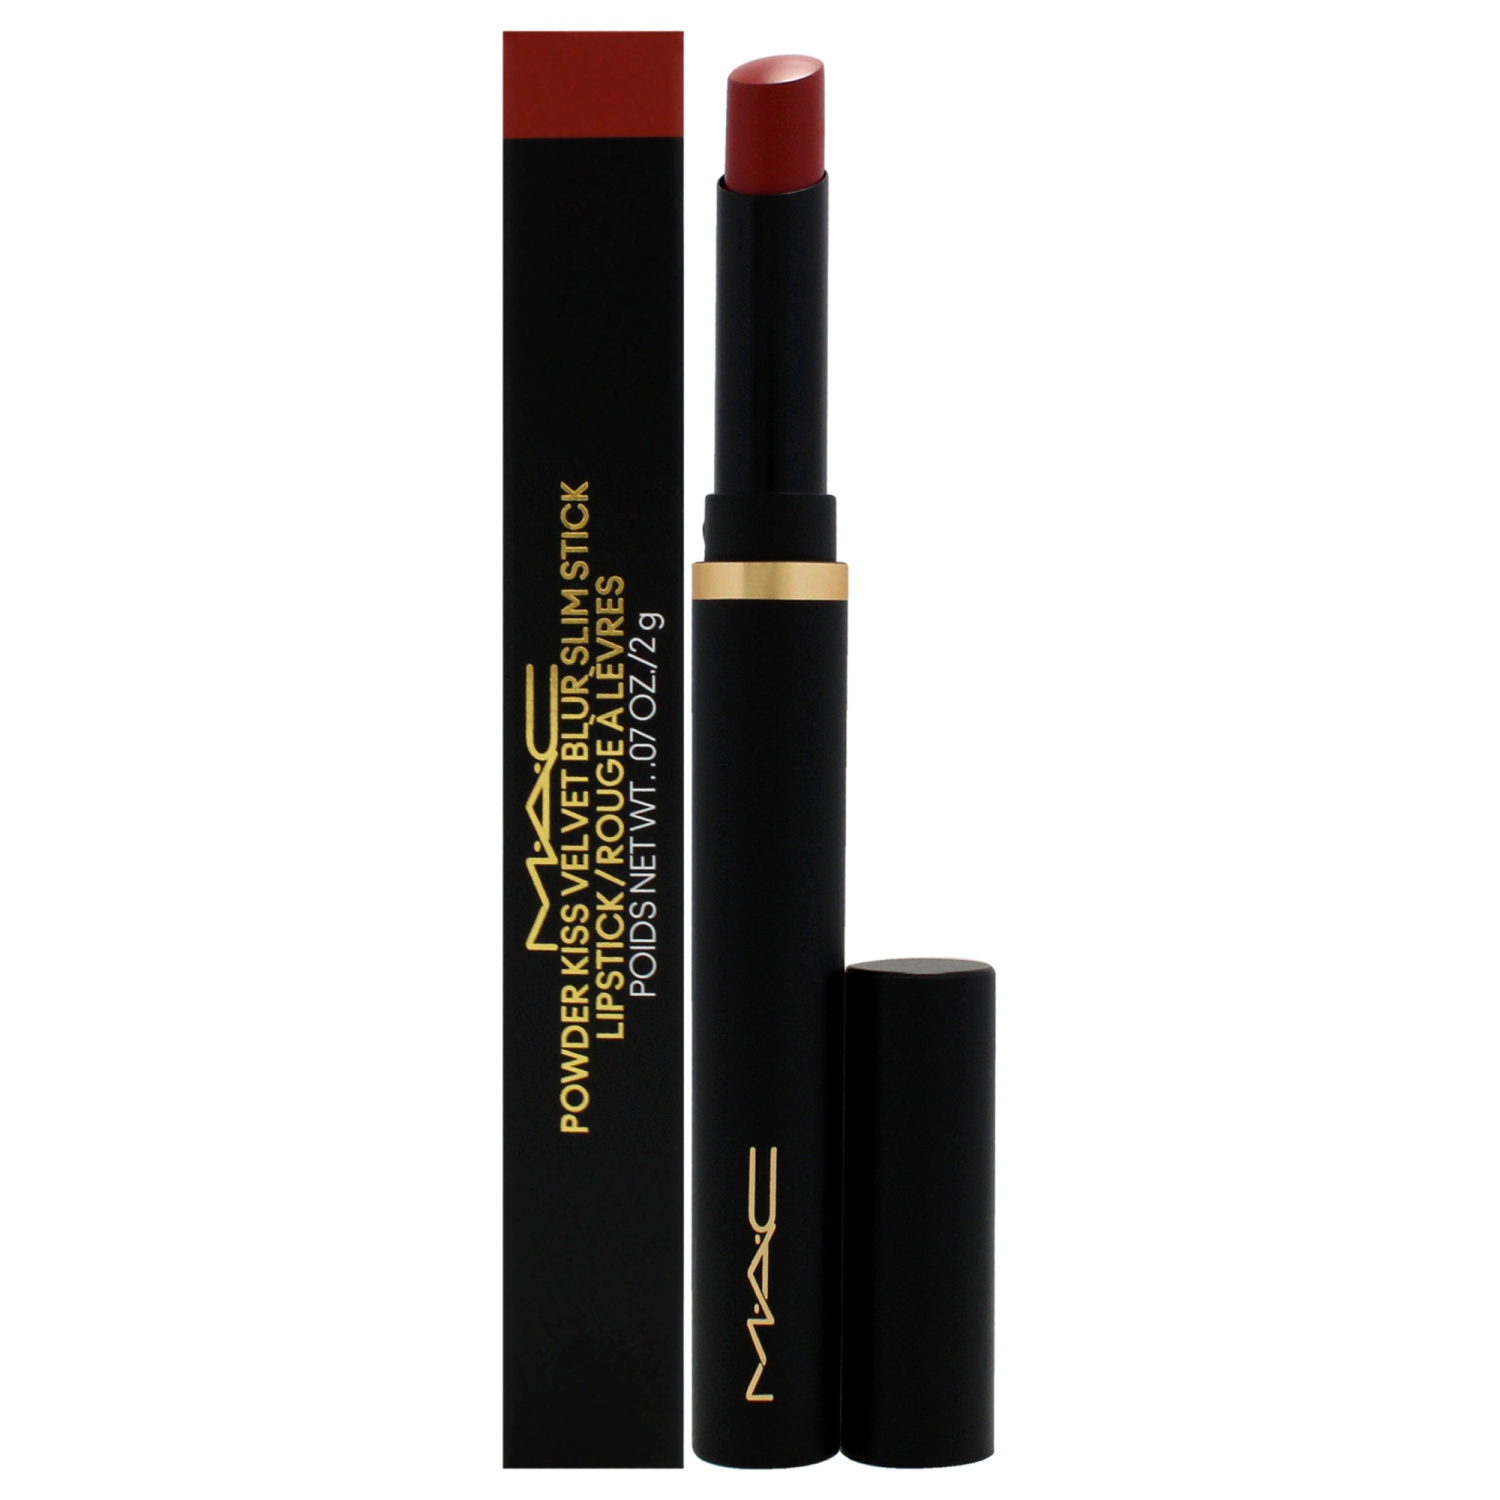 Powder Kiss Velvet Blur Slim Stick - Sweet Cinnamon by MAC for Women - 0.7 oz Lipstick